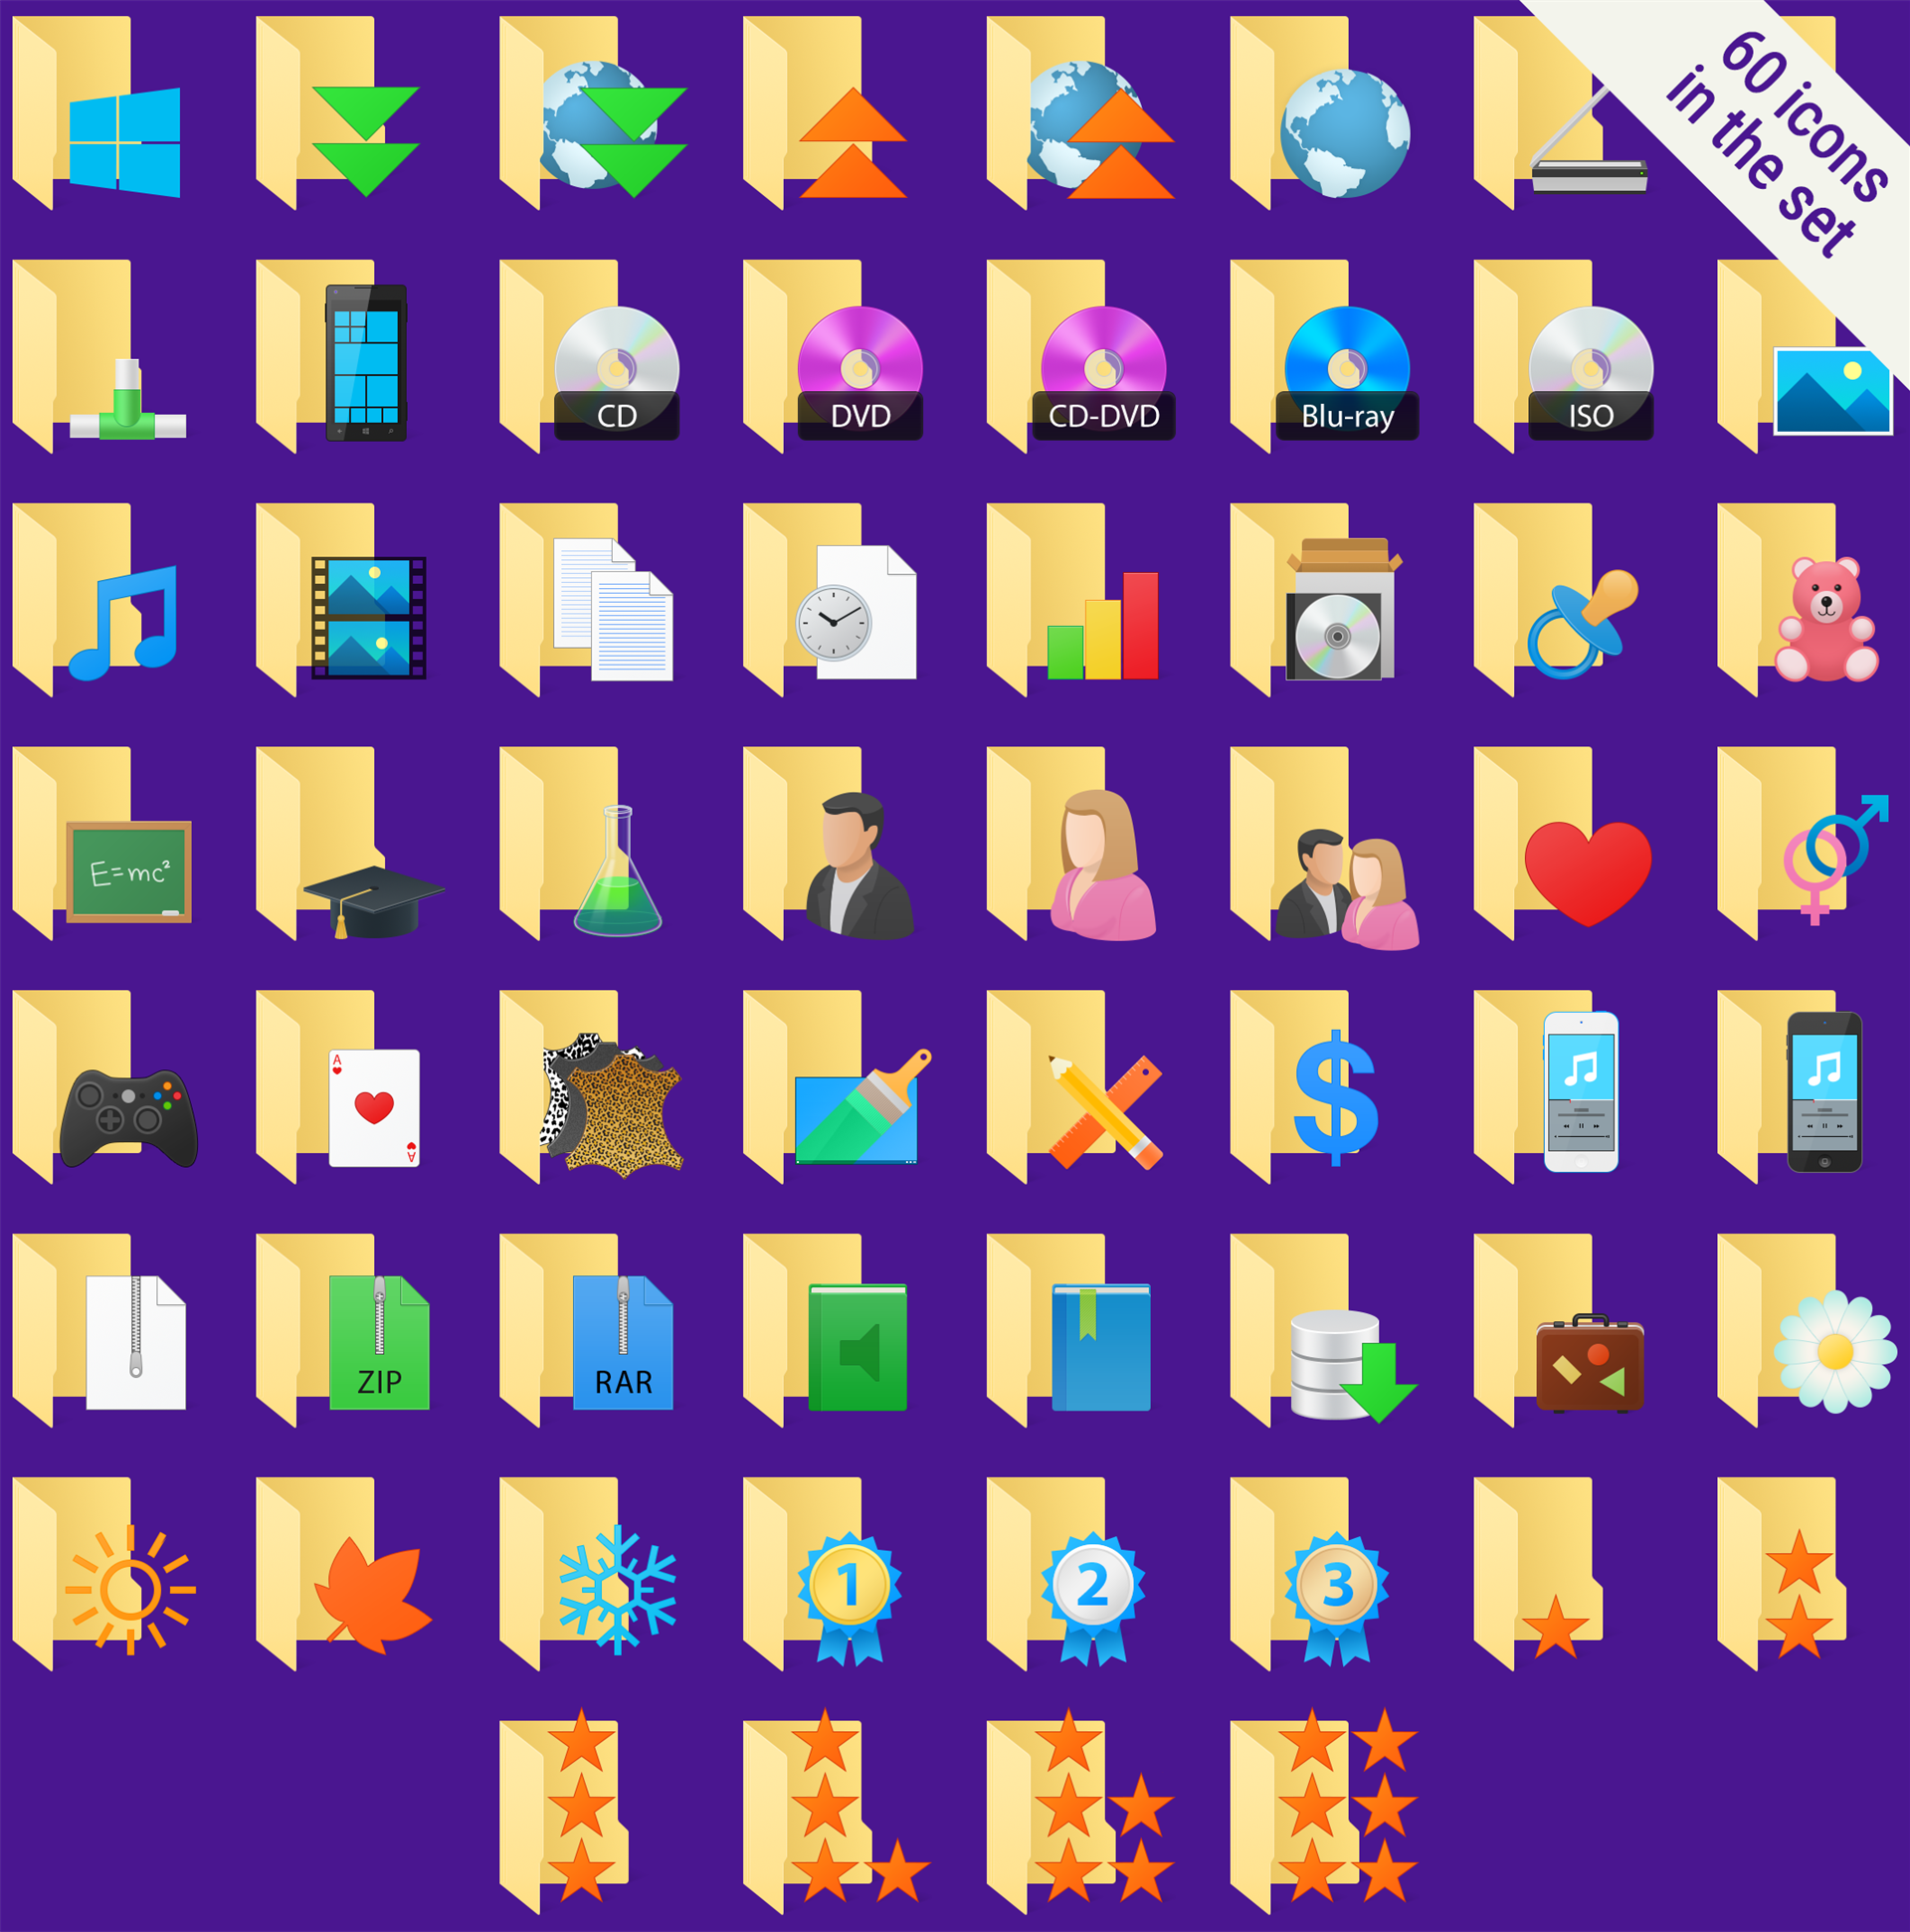 Folder Marker Pro + Everyday 10 Folder Icons Bundle Screenshot